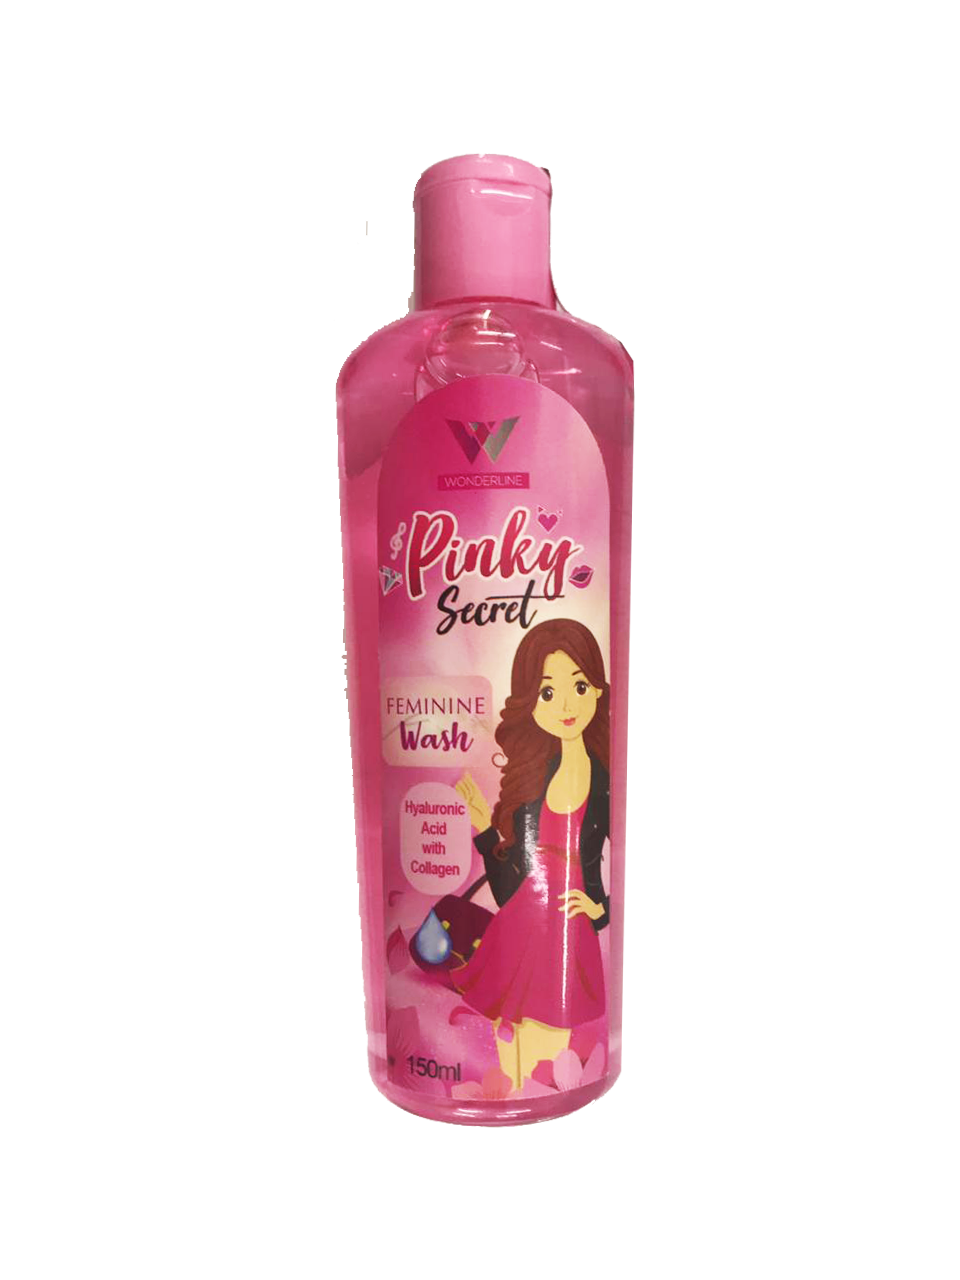 Pinky Secret Feminine Wash 150ml